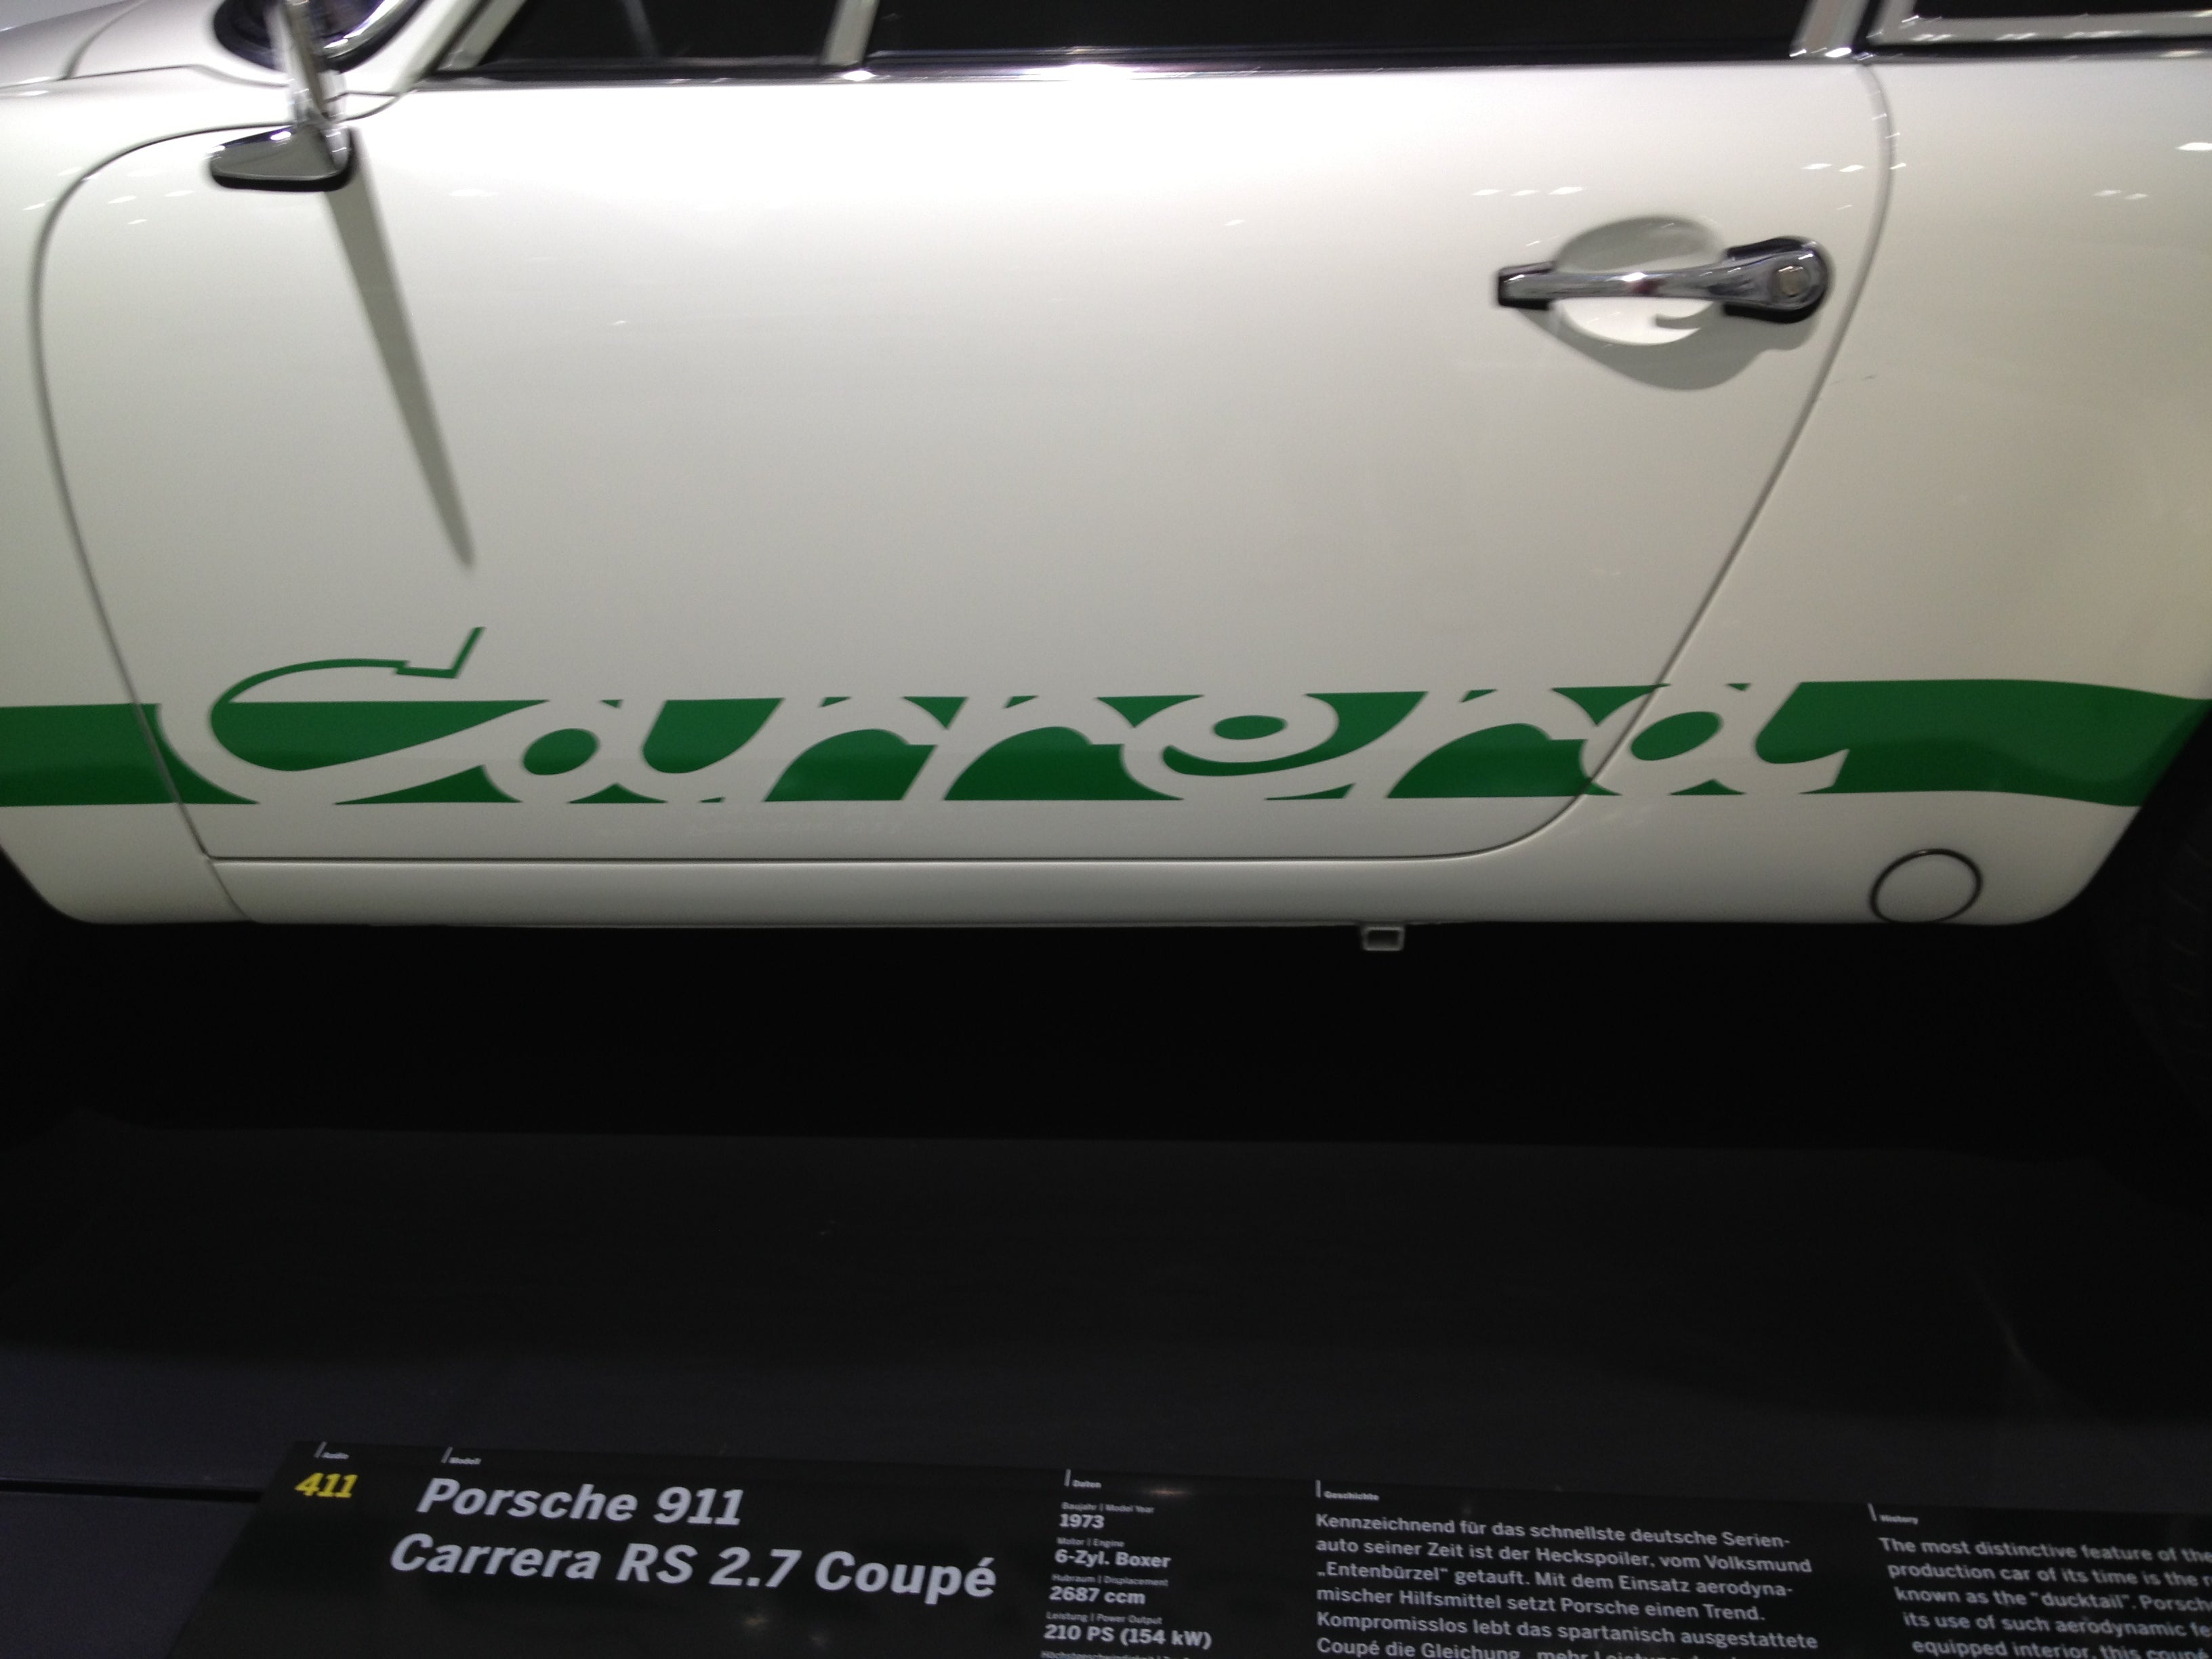 Porsche Museum hosts special ‘Spirit of Carrera RS’ exhibition